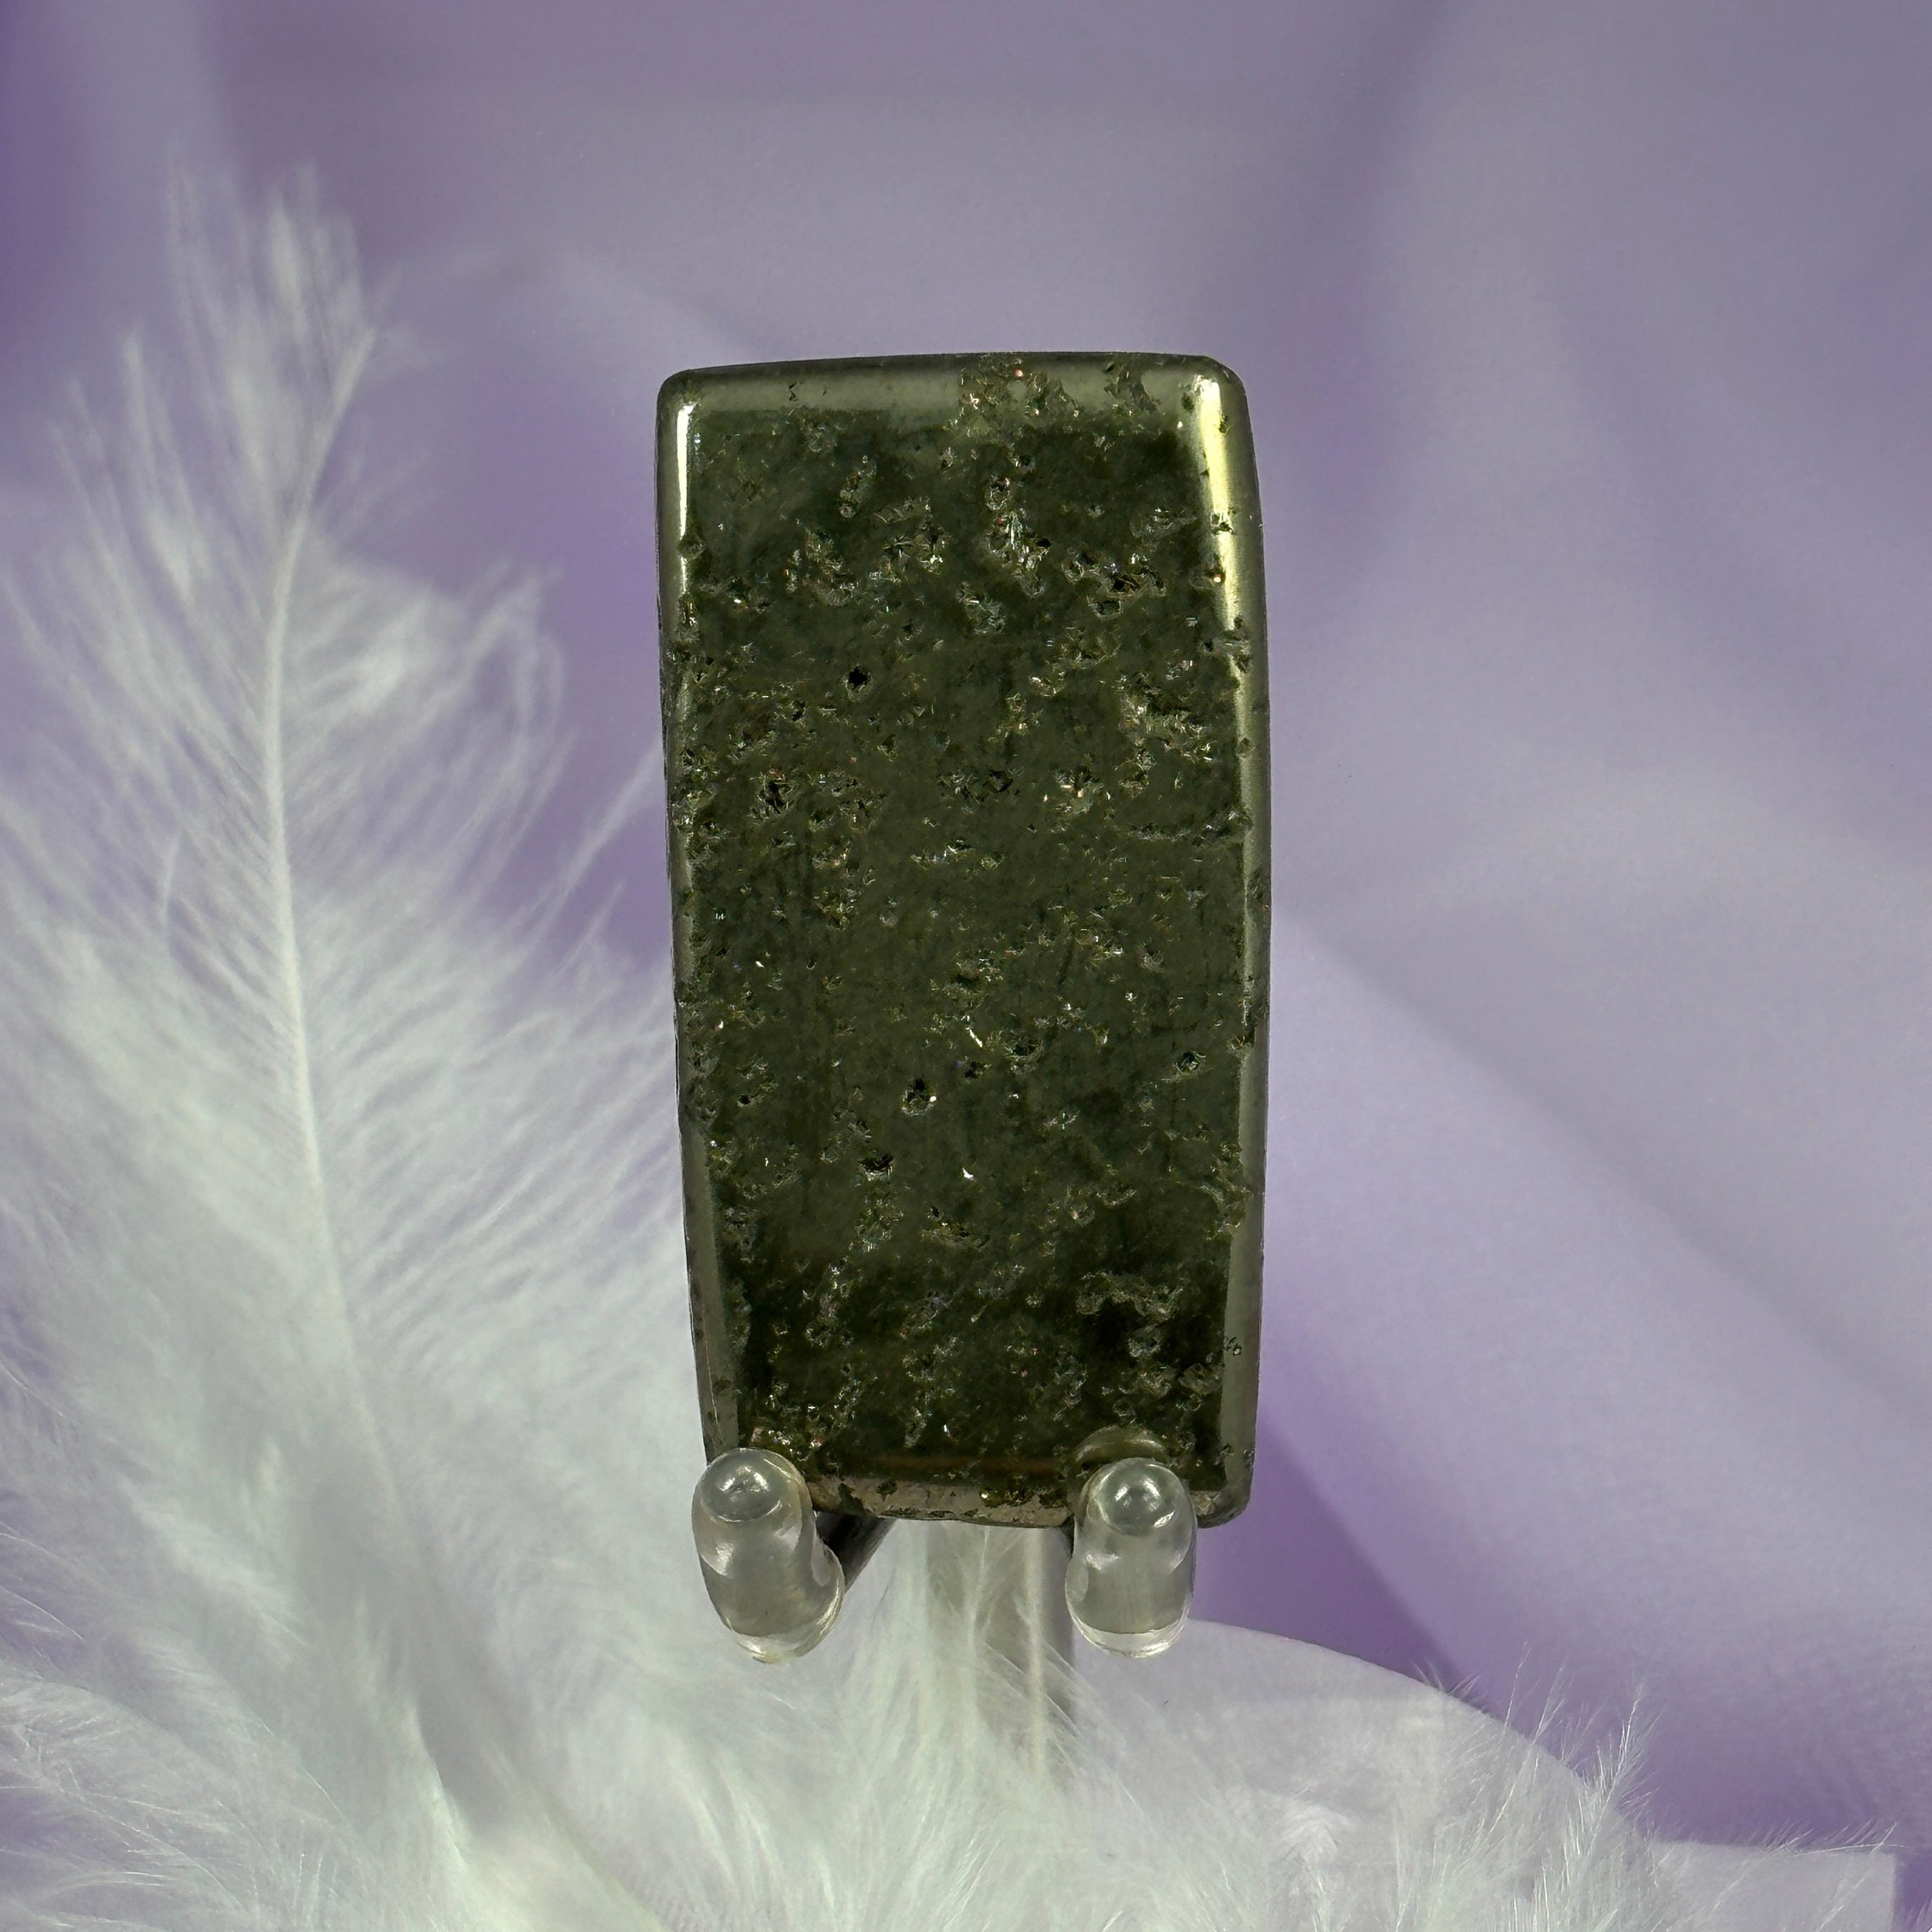 Golden Iron Pyrite crystal polished slice 20g SN55715